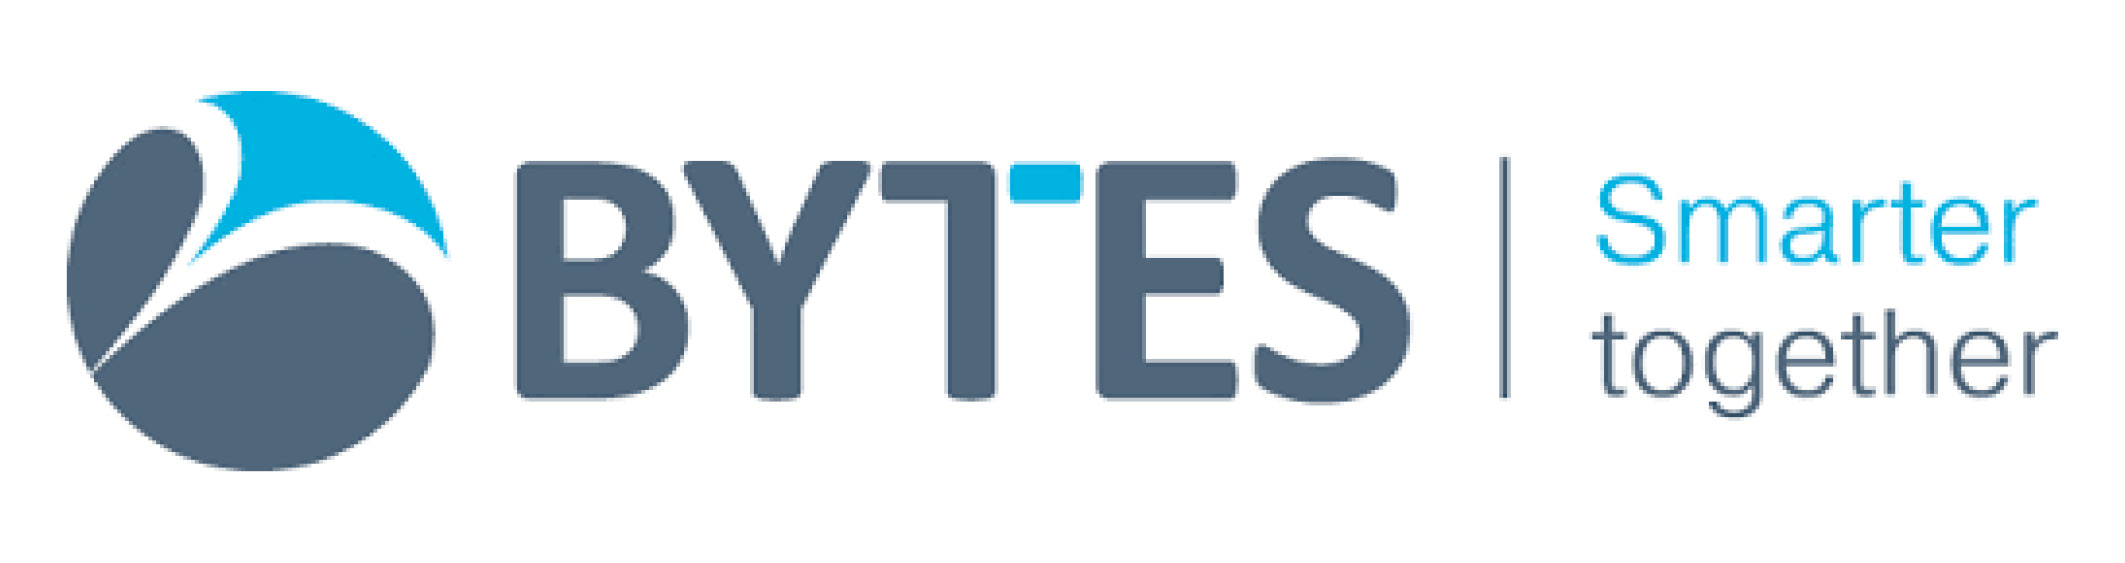 Bytes Software Services Logo